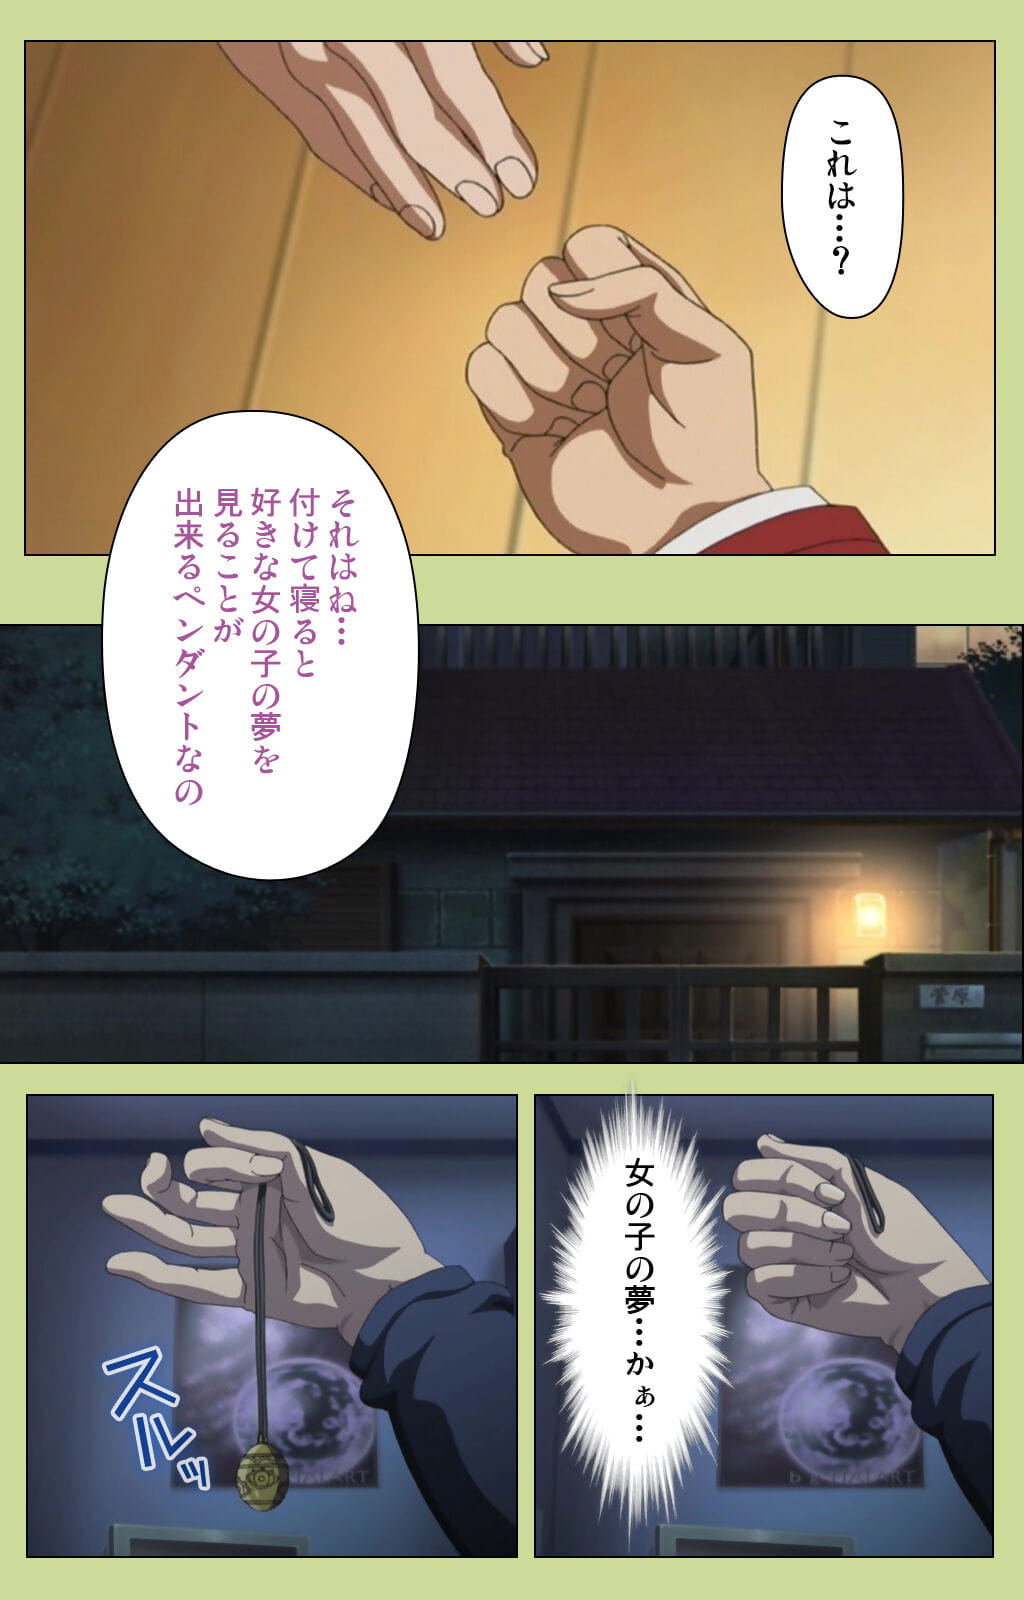 lune Bande dessinée Plein couleur seijin interdiction inmu gakuen spécial complet interdiction